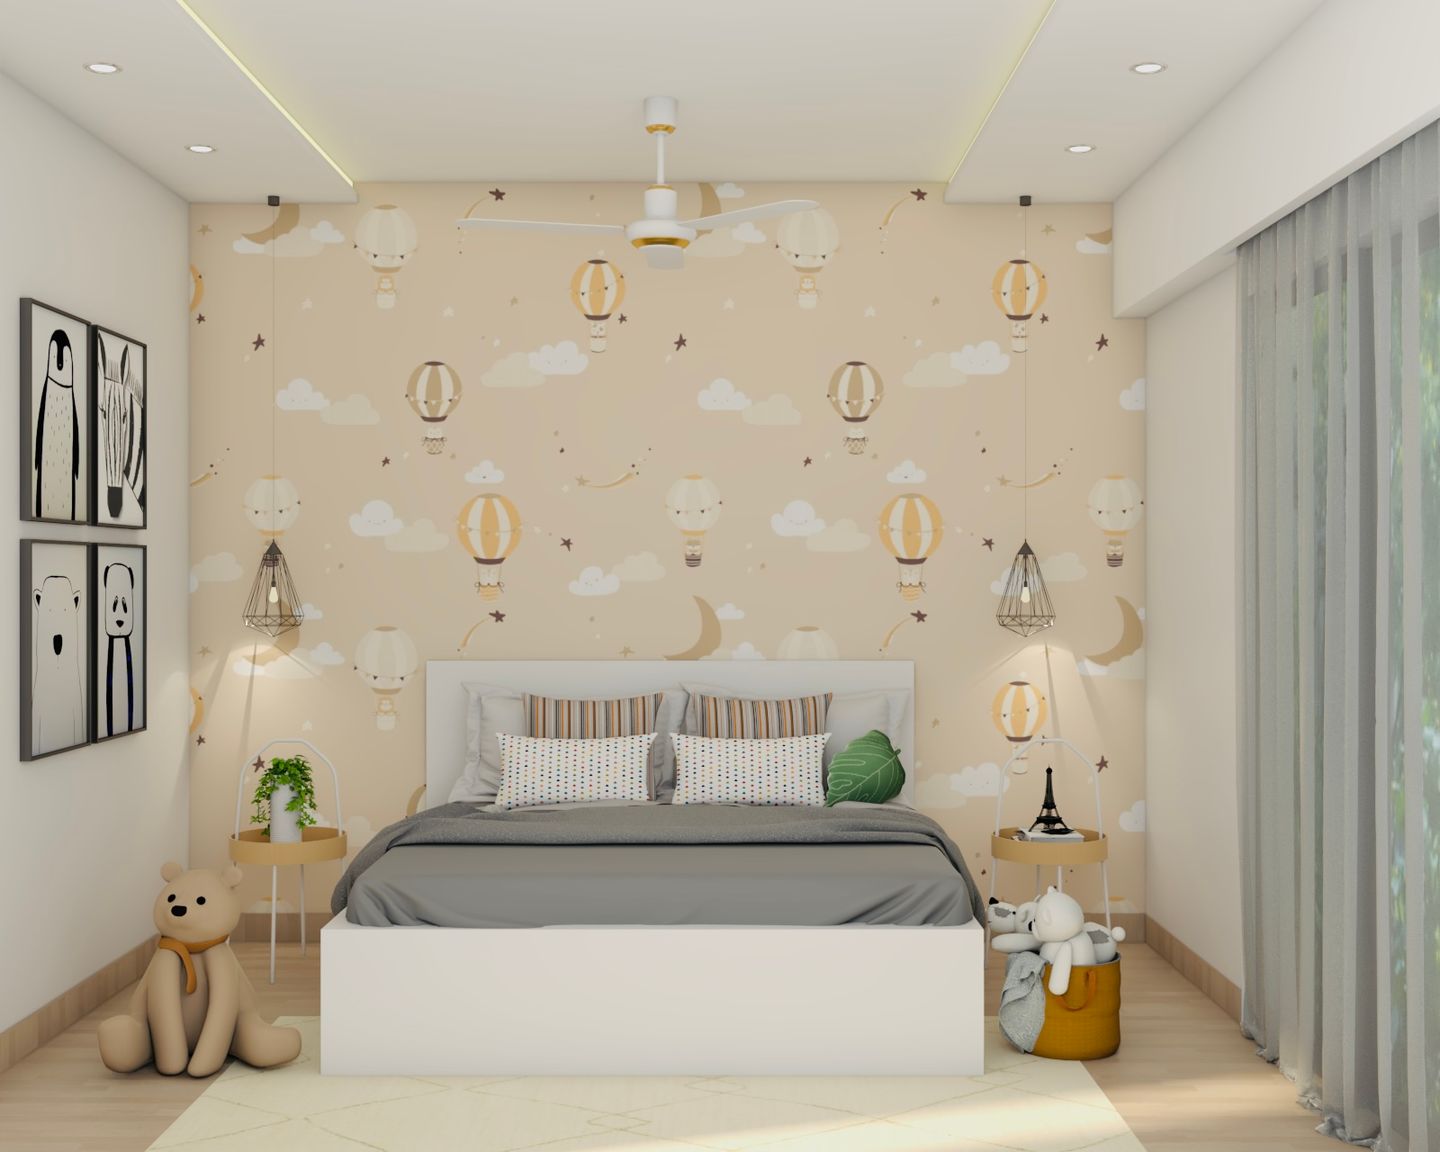 Linear Gypsum Ceiling Design For Bedrooms - Livspace